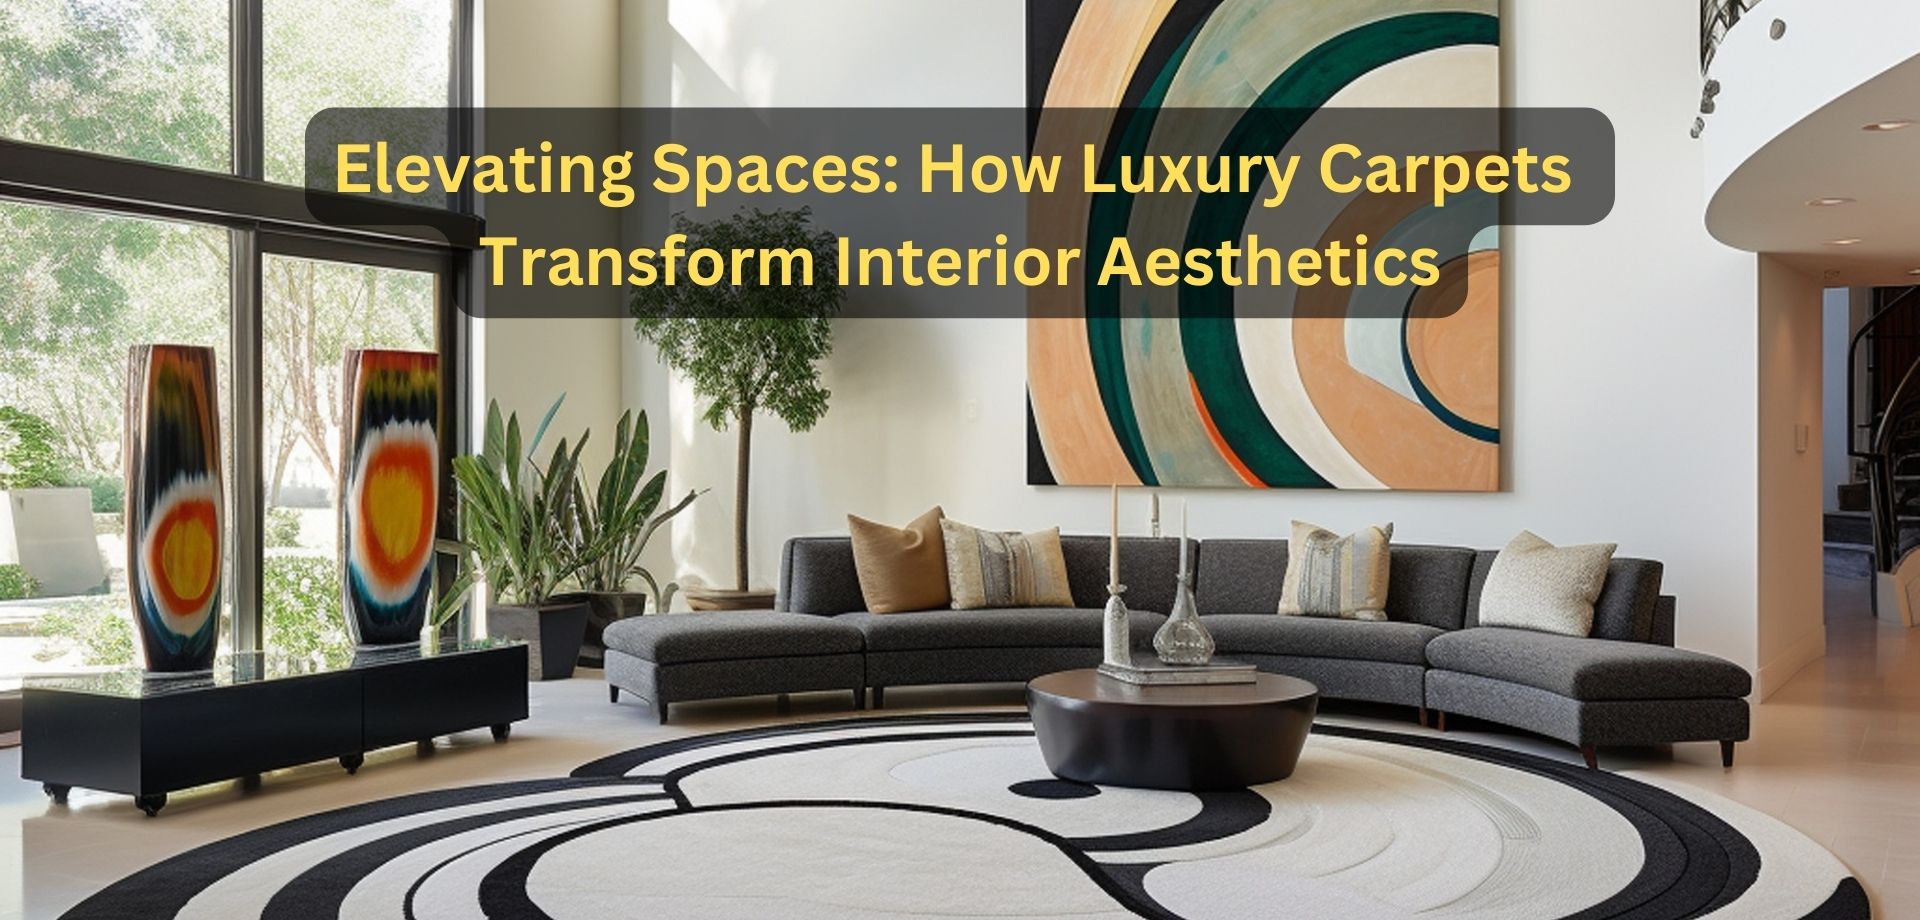 Elevating Spaces: How Luxury Carpets Transform Interior Aesthetics